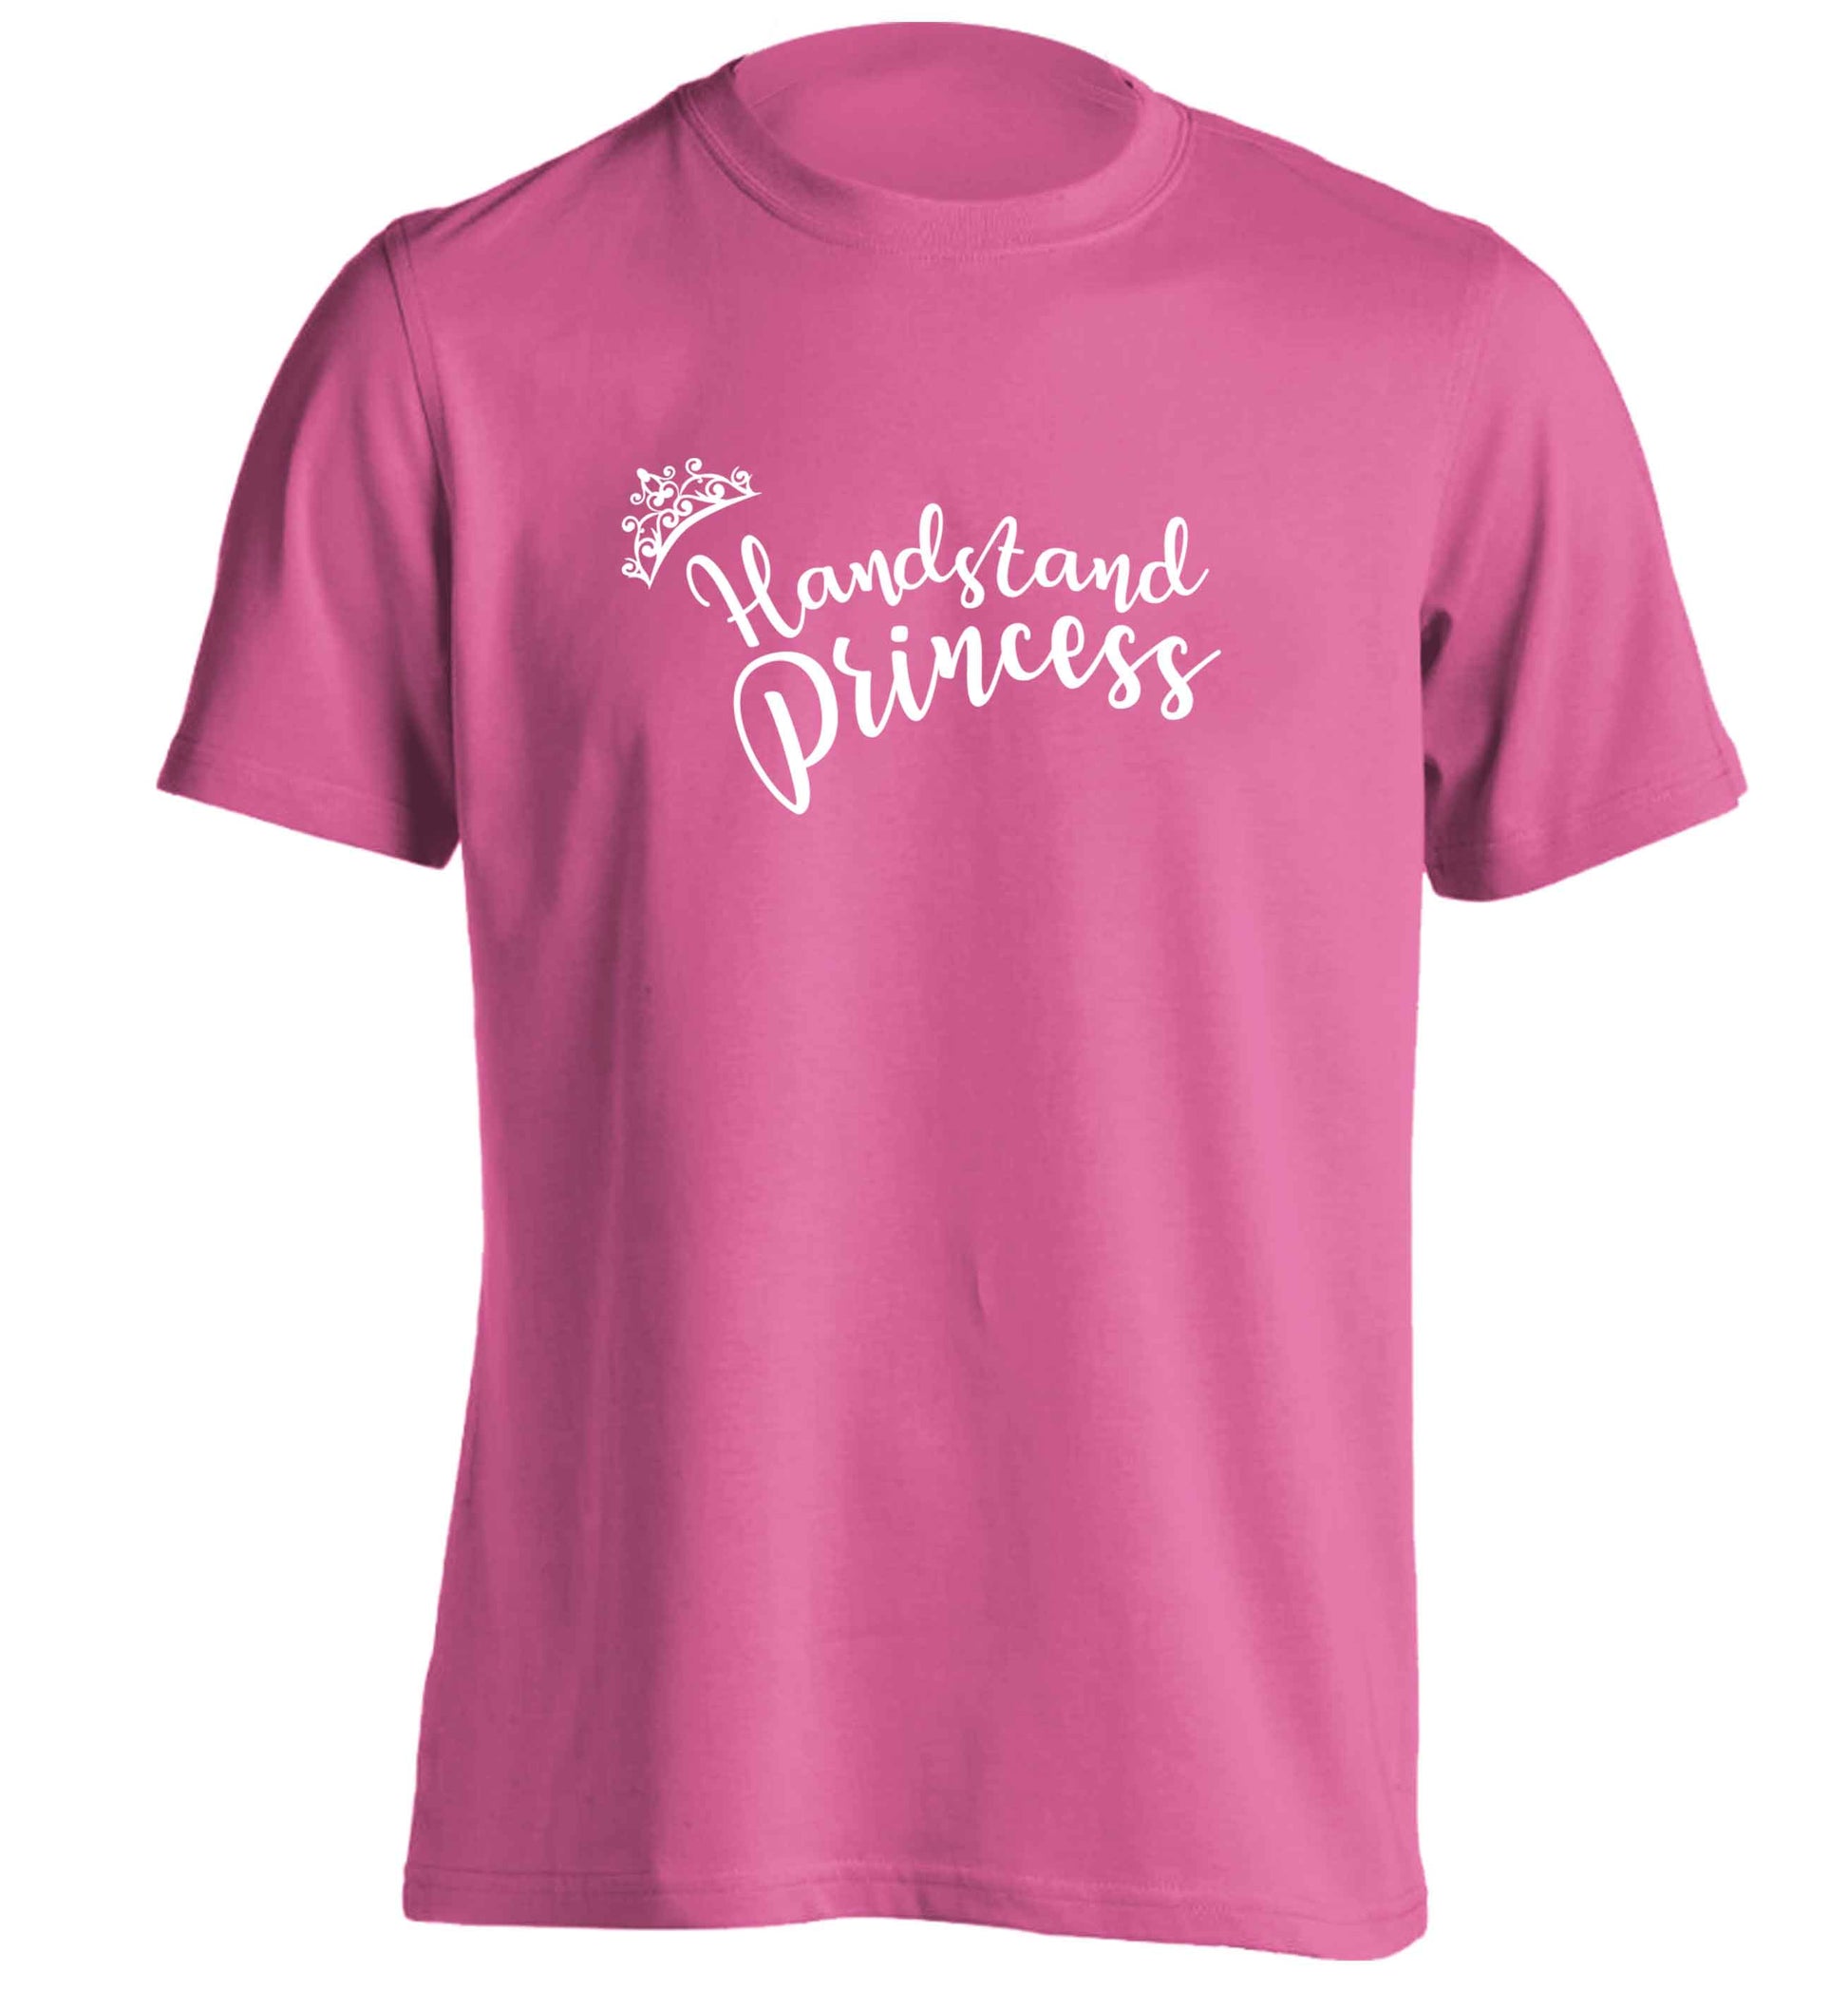 Handstand princess adults unisex pink Tshirt 2XL